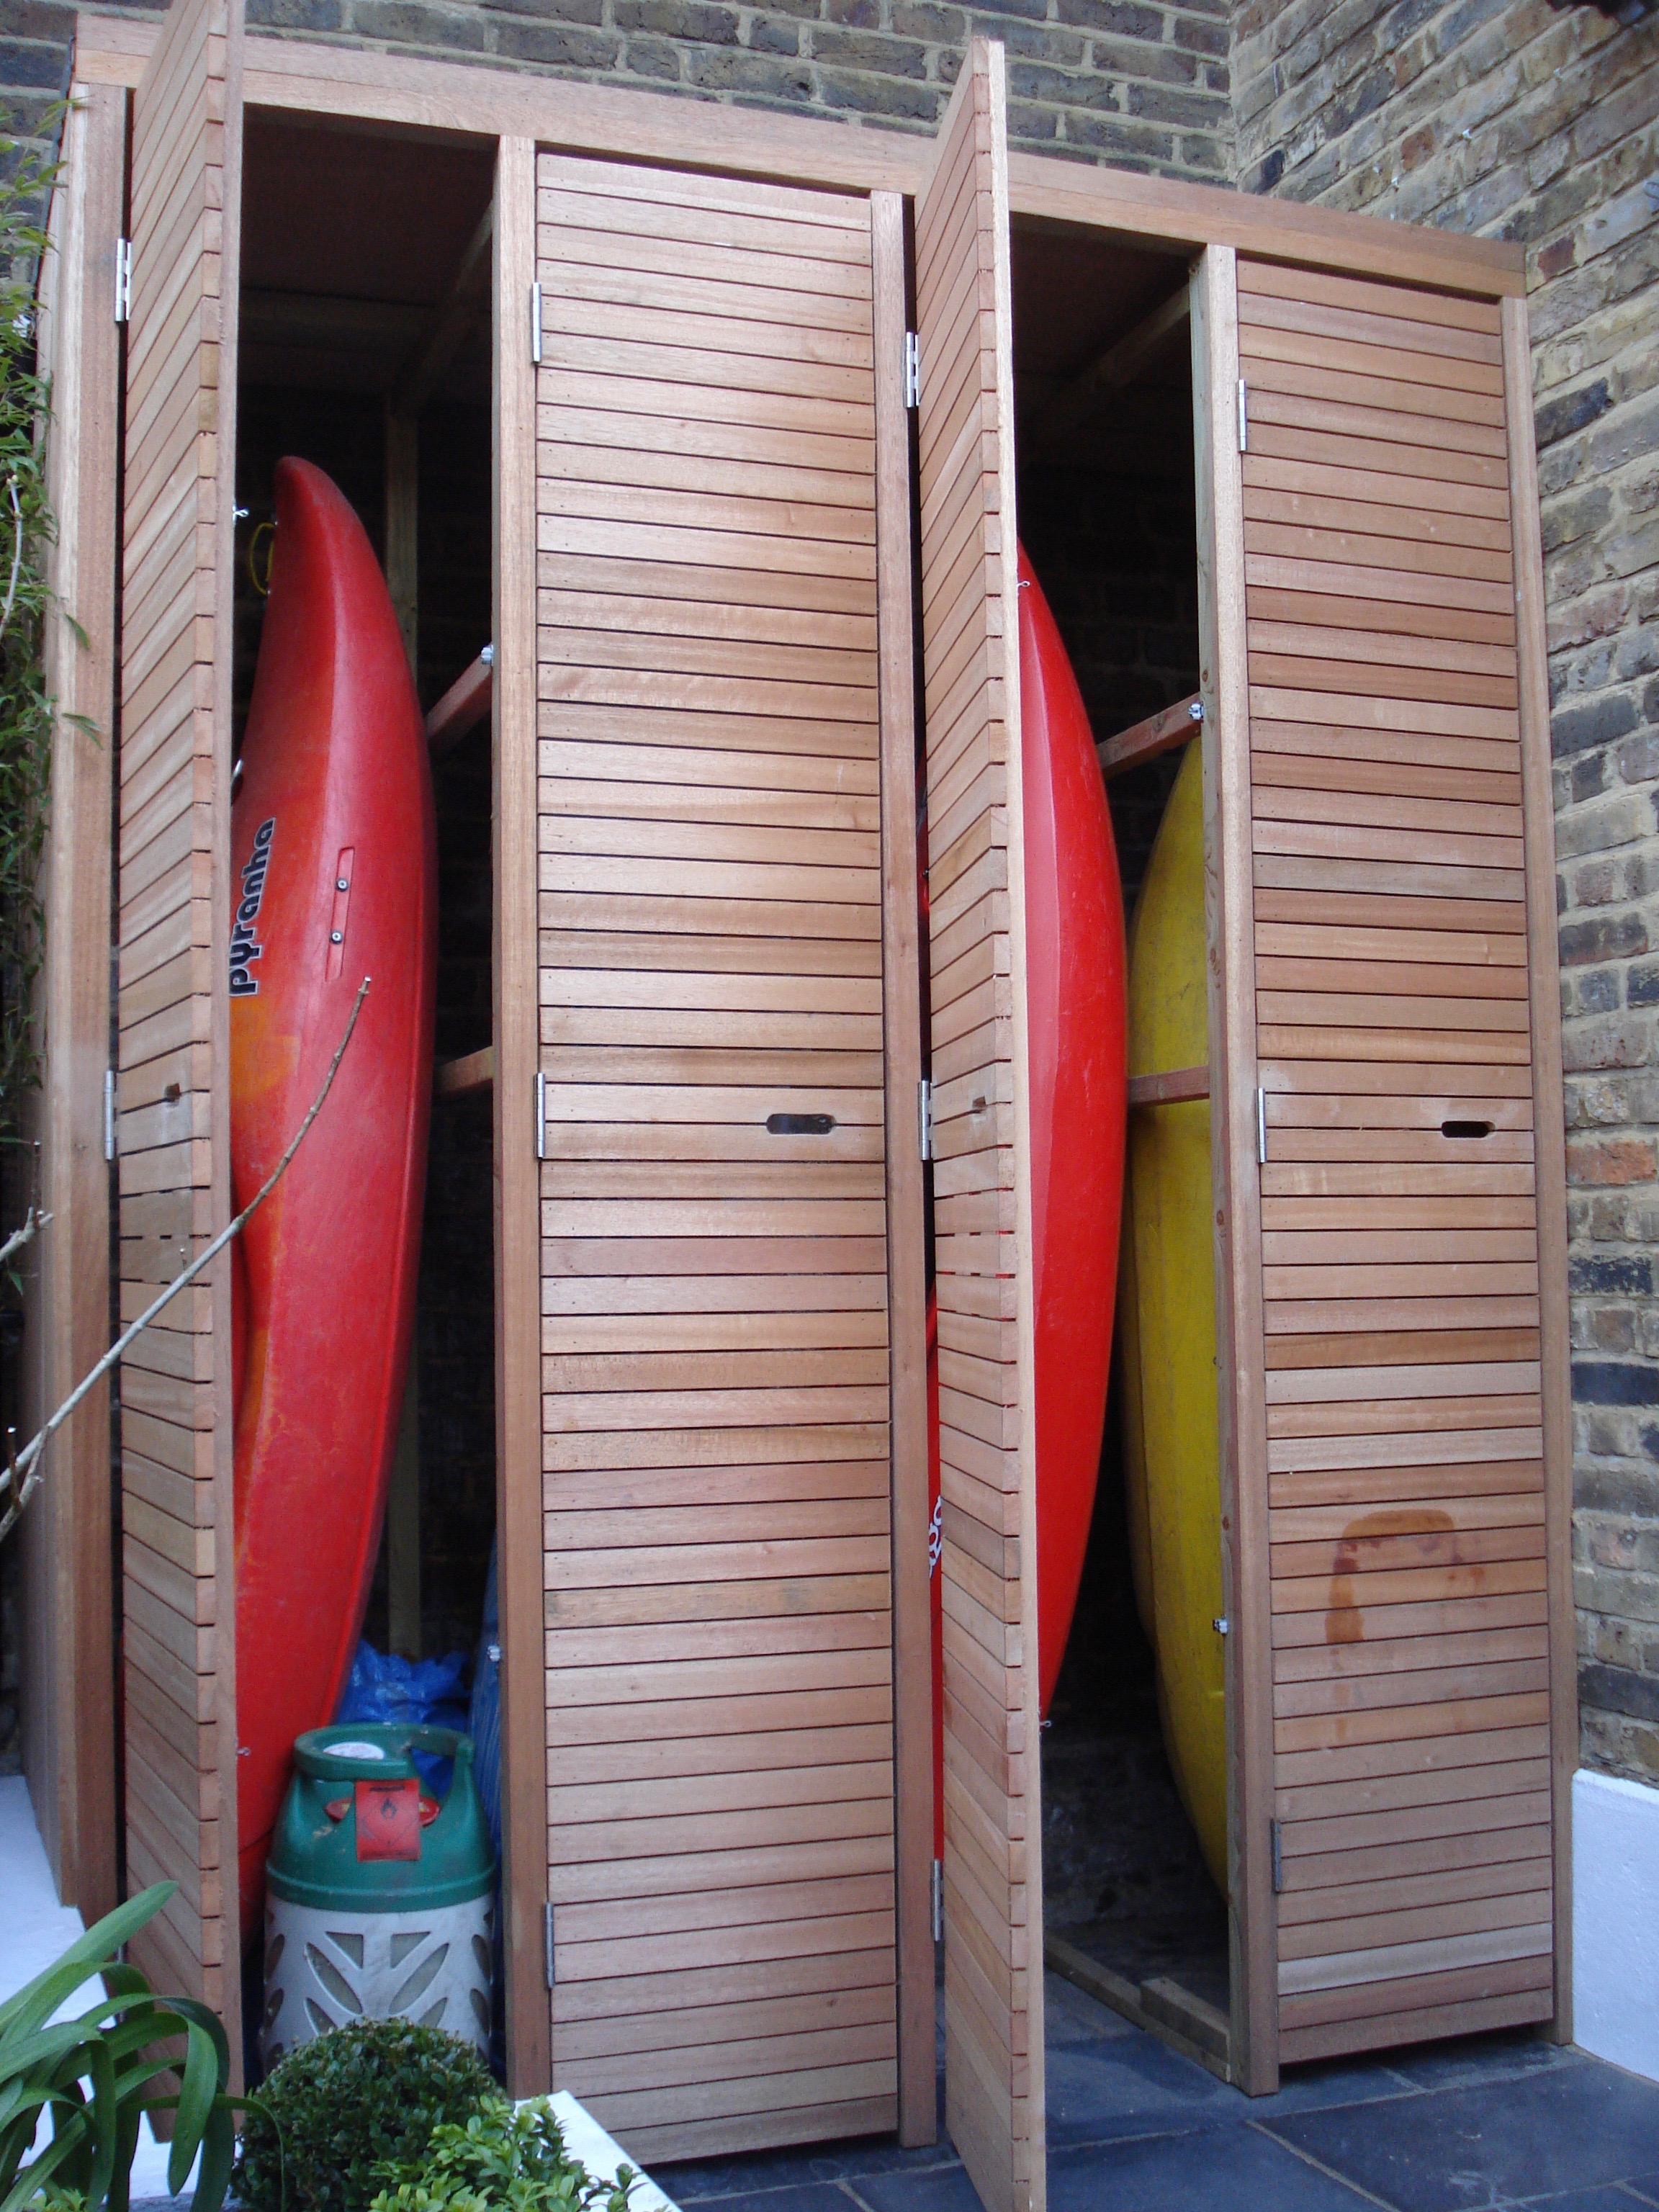 Canoe storage